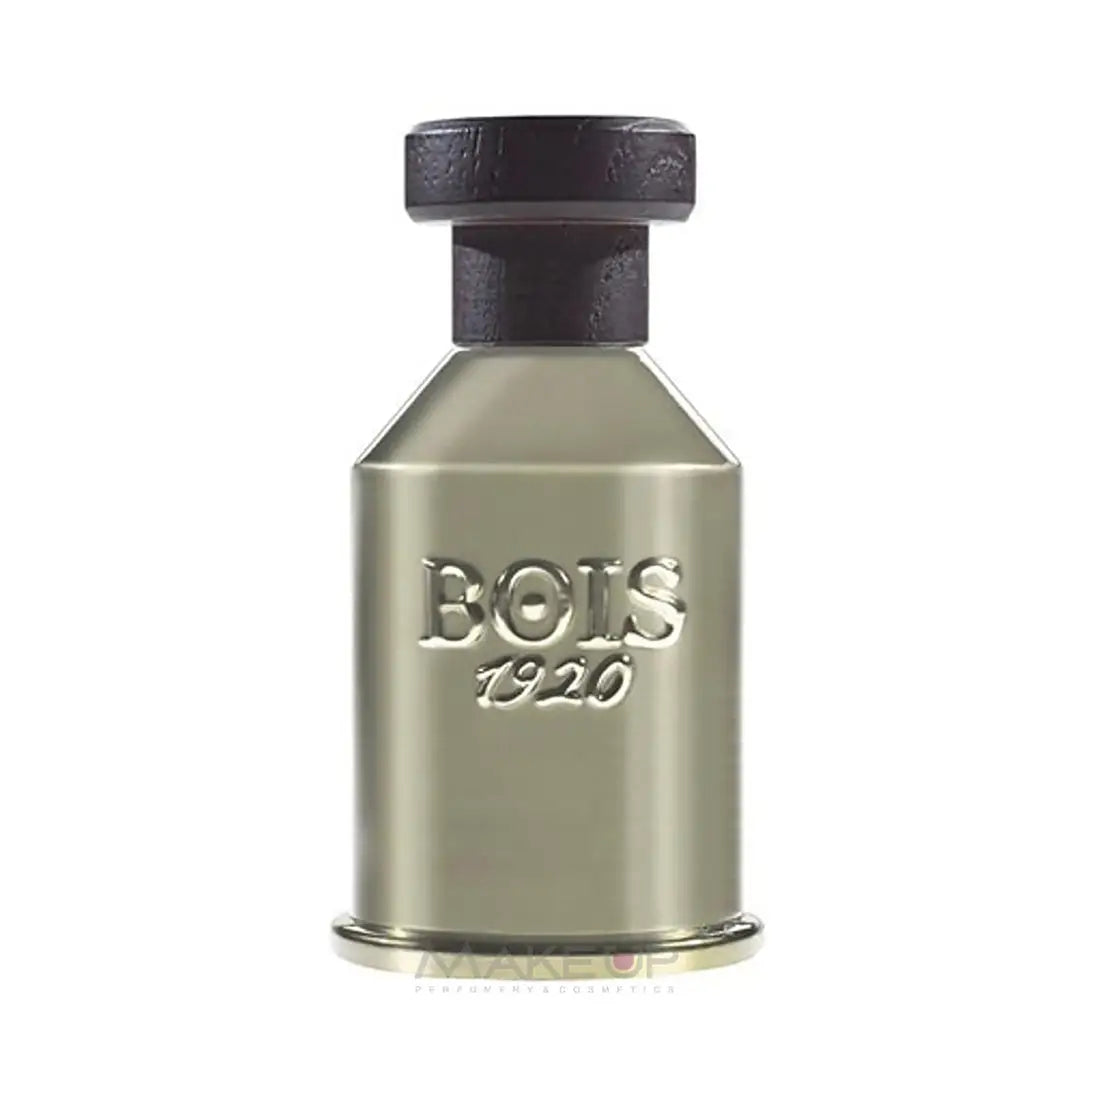 Bois 1920 Dolce di Giorno Eau de Parfum 100 ml - Free 